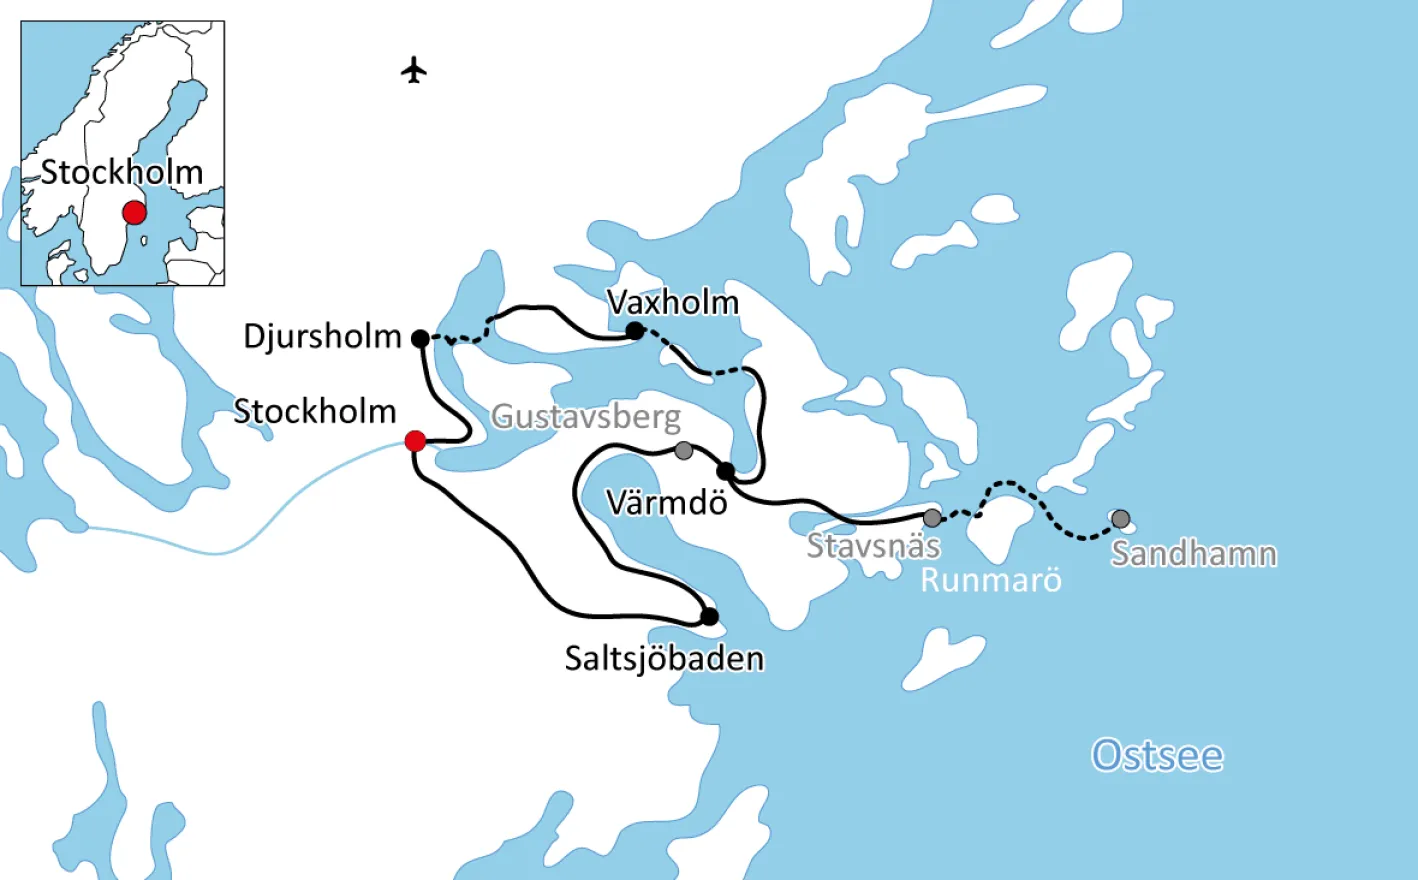 Map for the cycling tour through Stockholm‘s archipelago